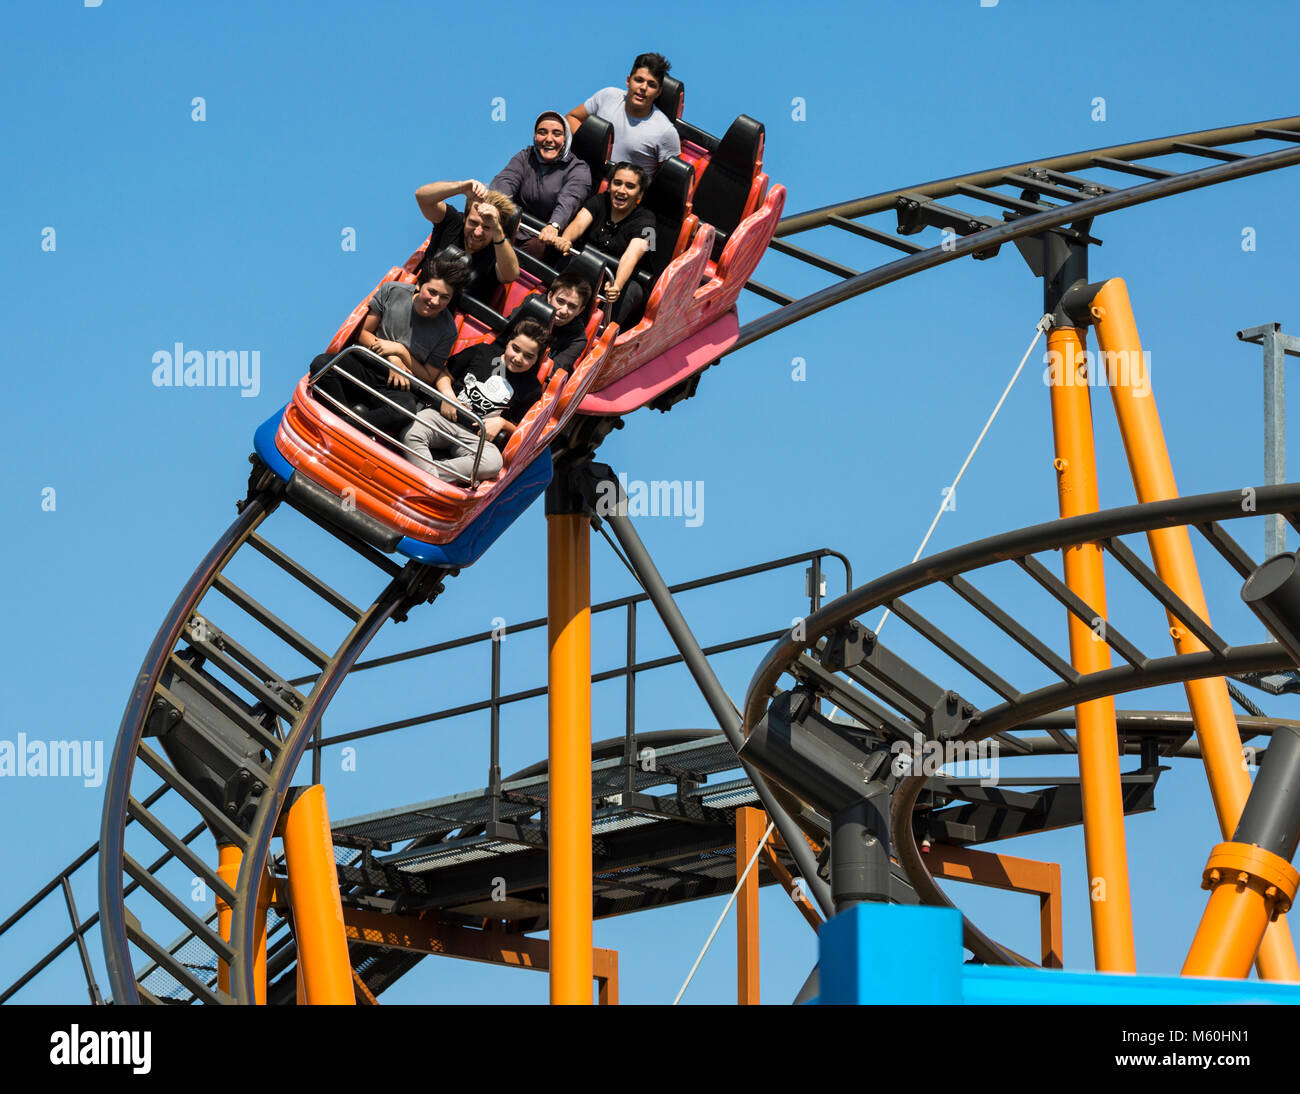 Rollercoaster ride, Prater amusement park, Leopoldstadt, Vienna, Austria  Stock Photo - Alamy